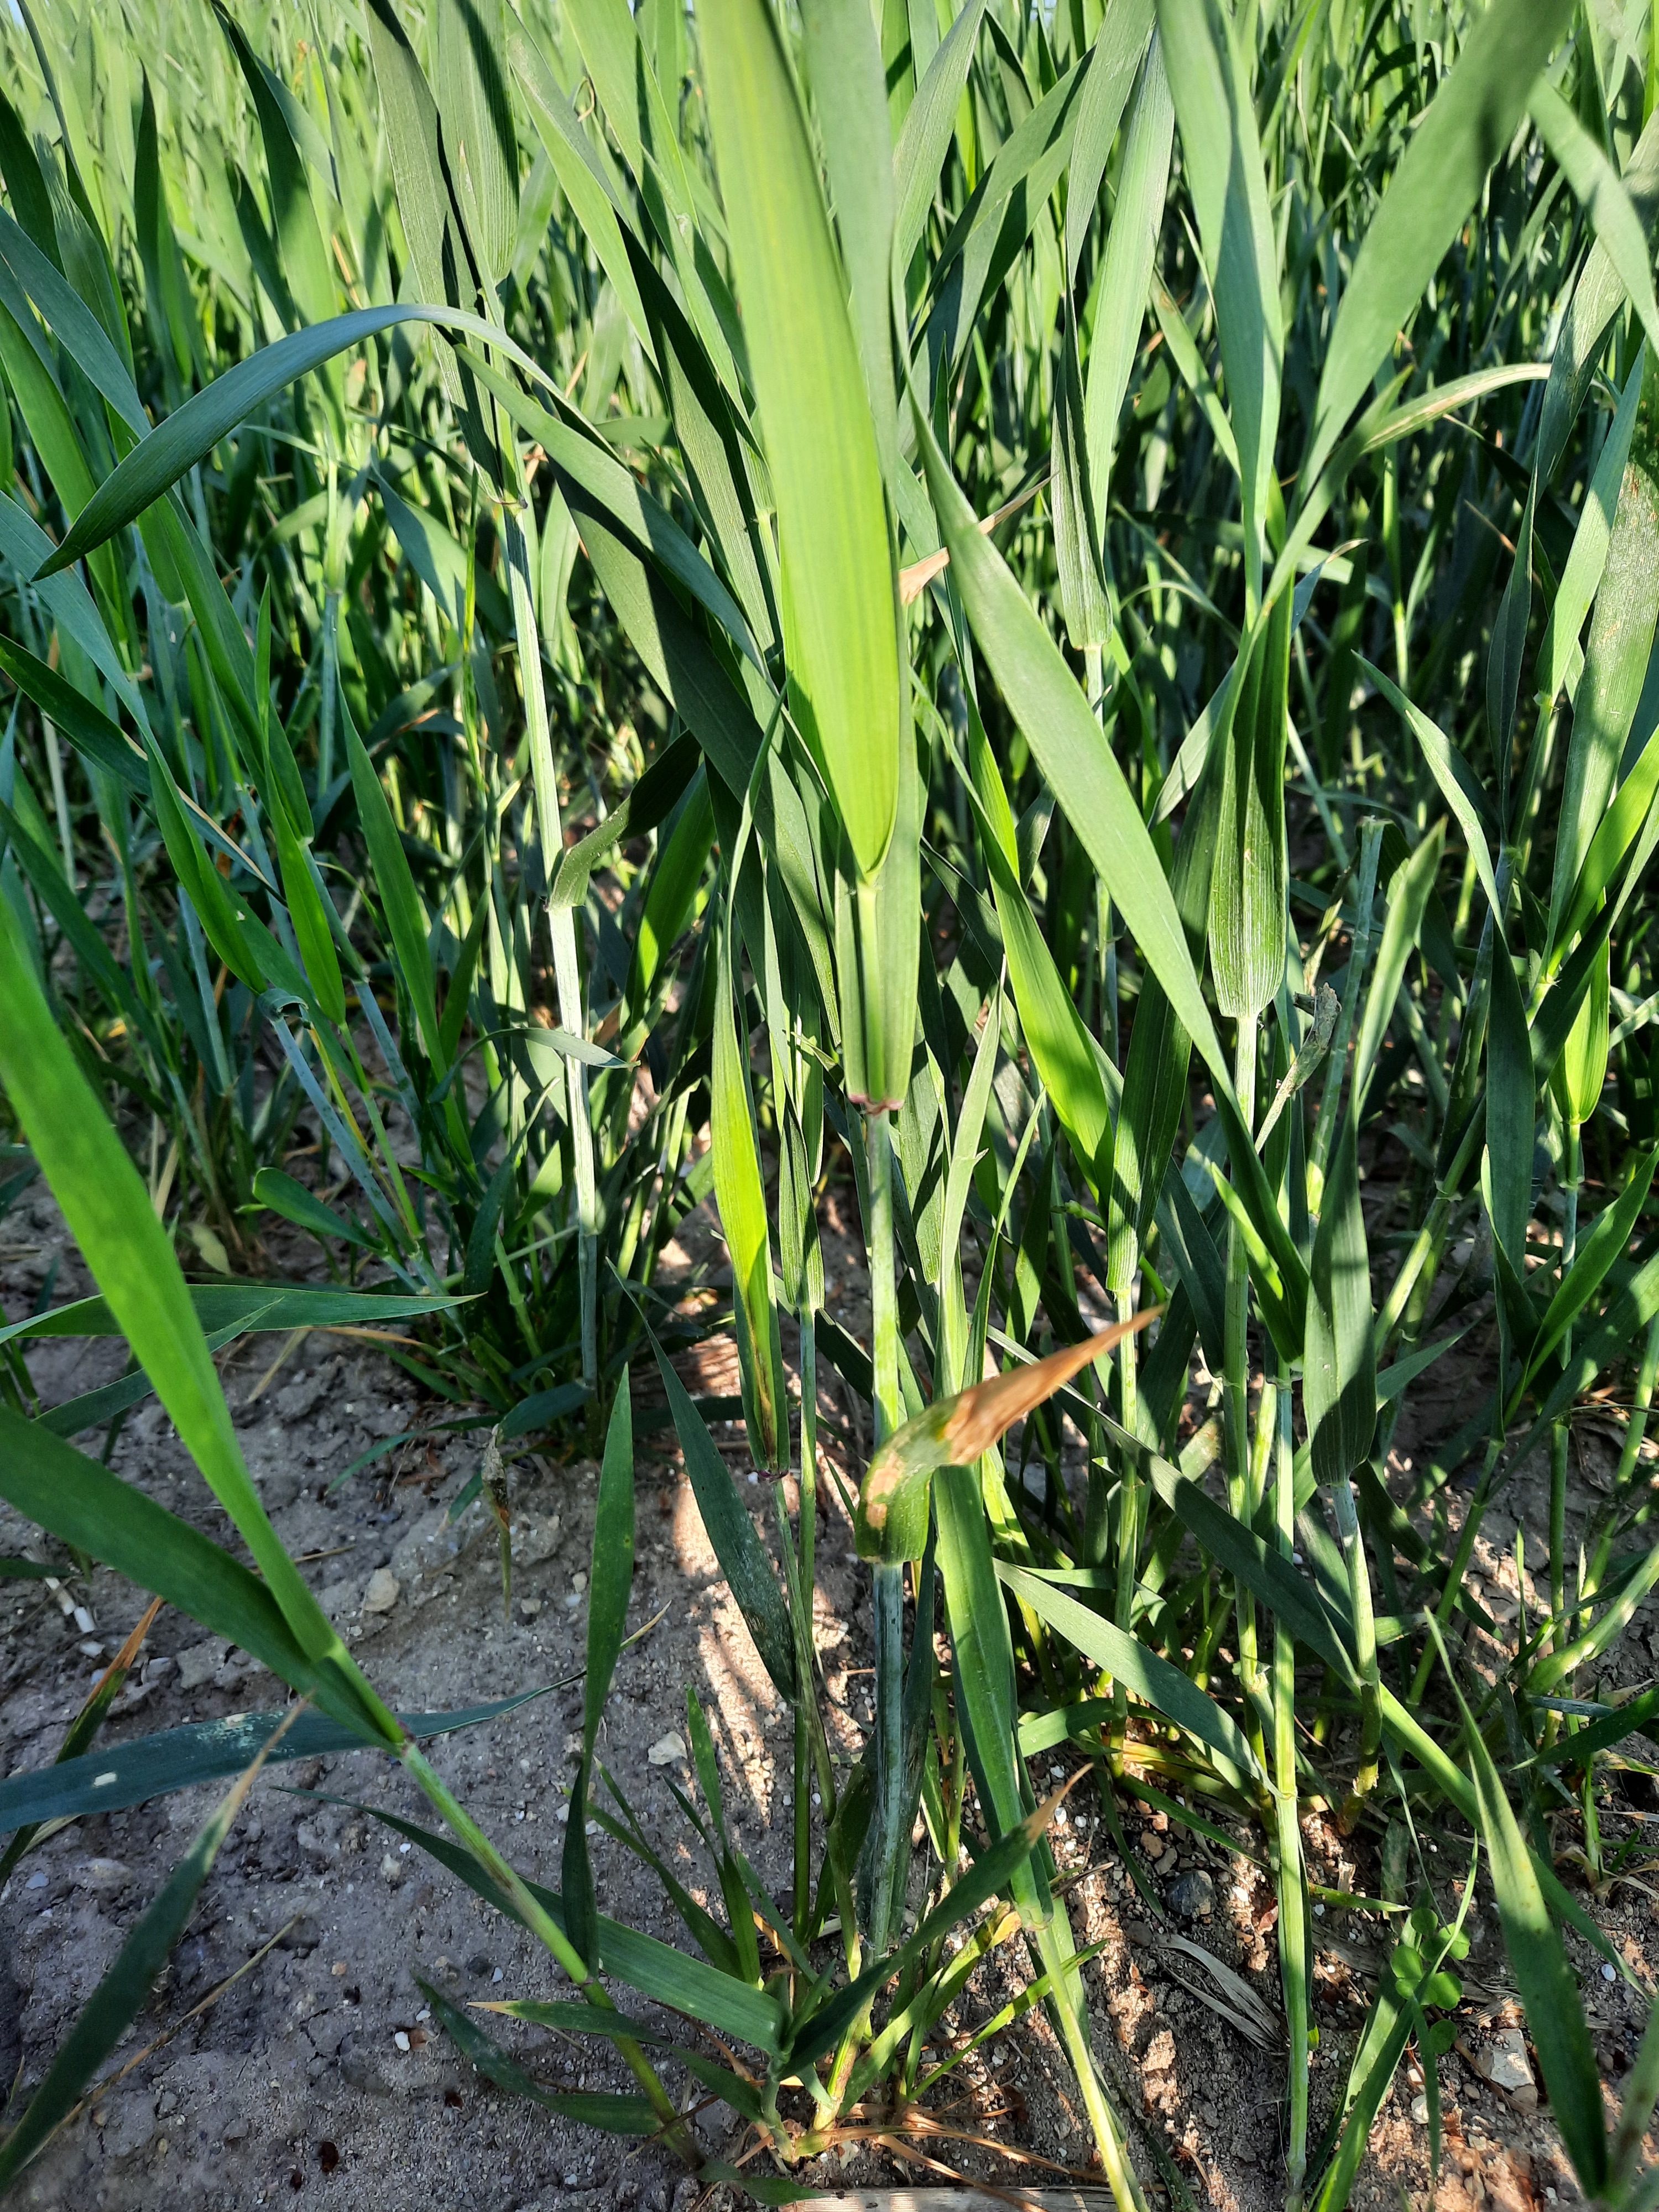 Wheat growth.